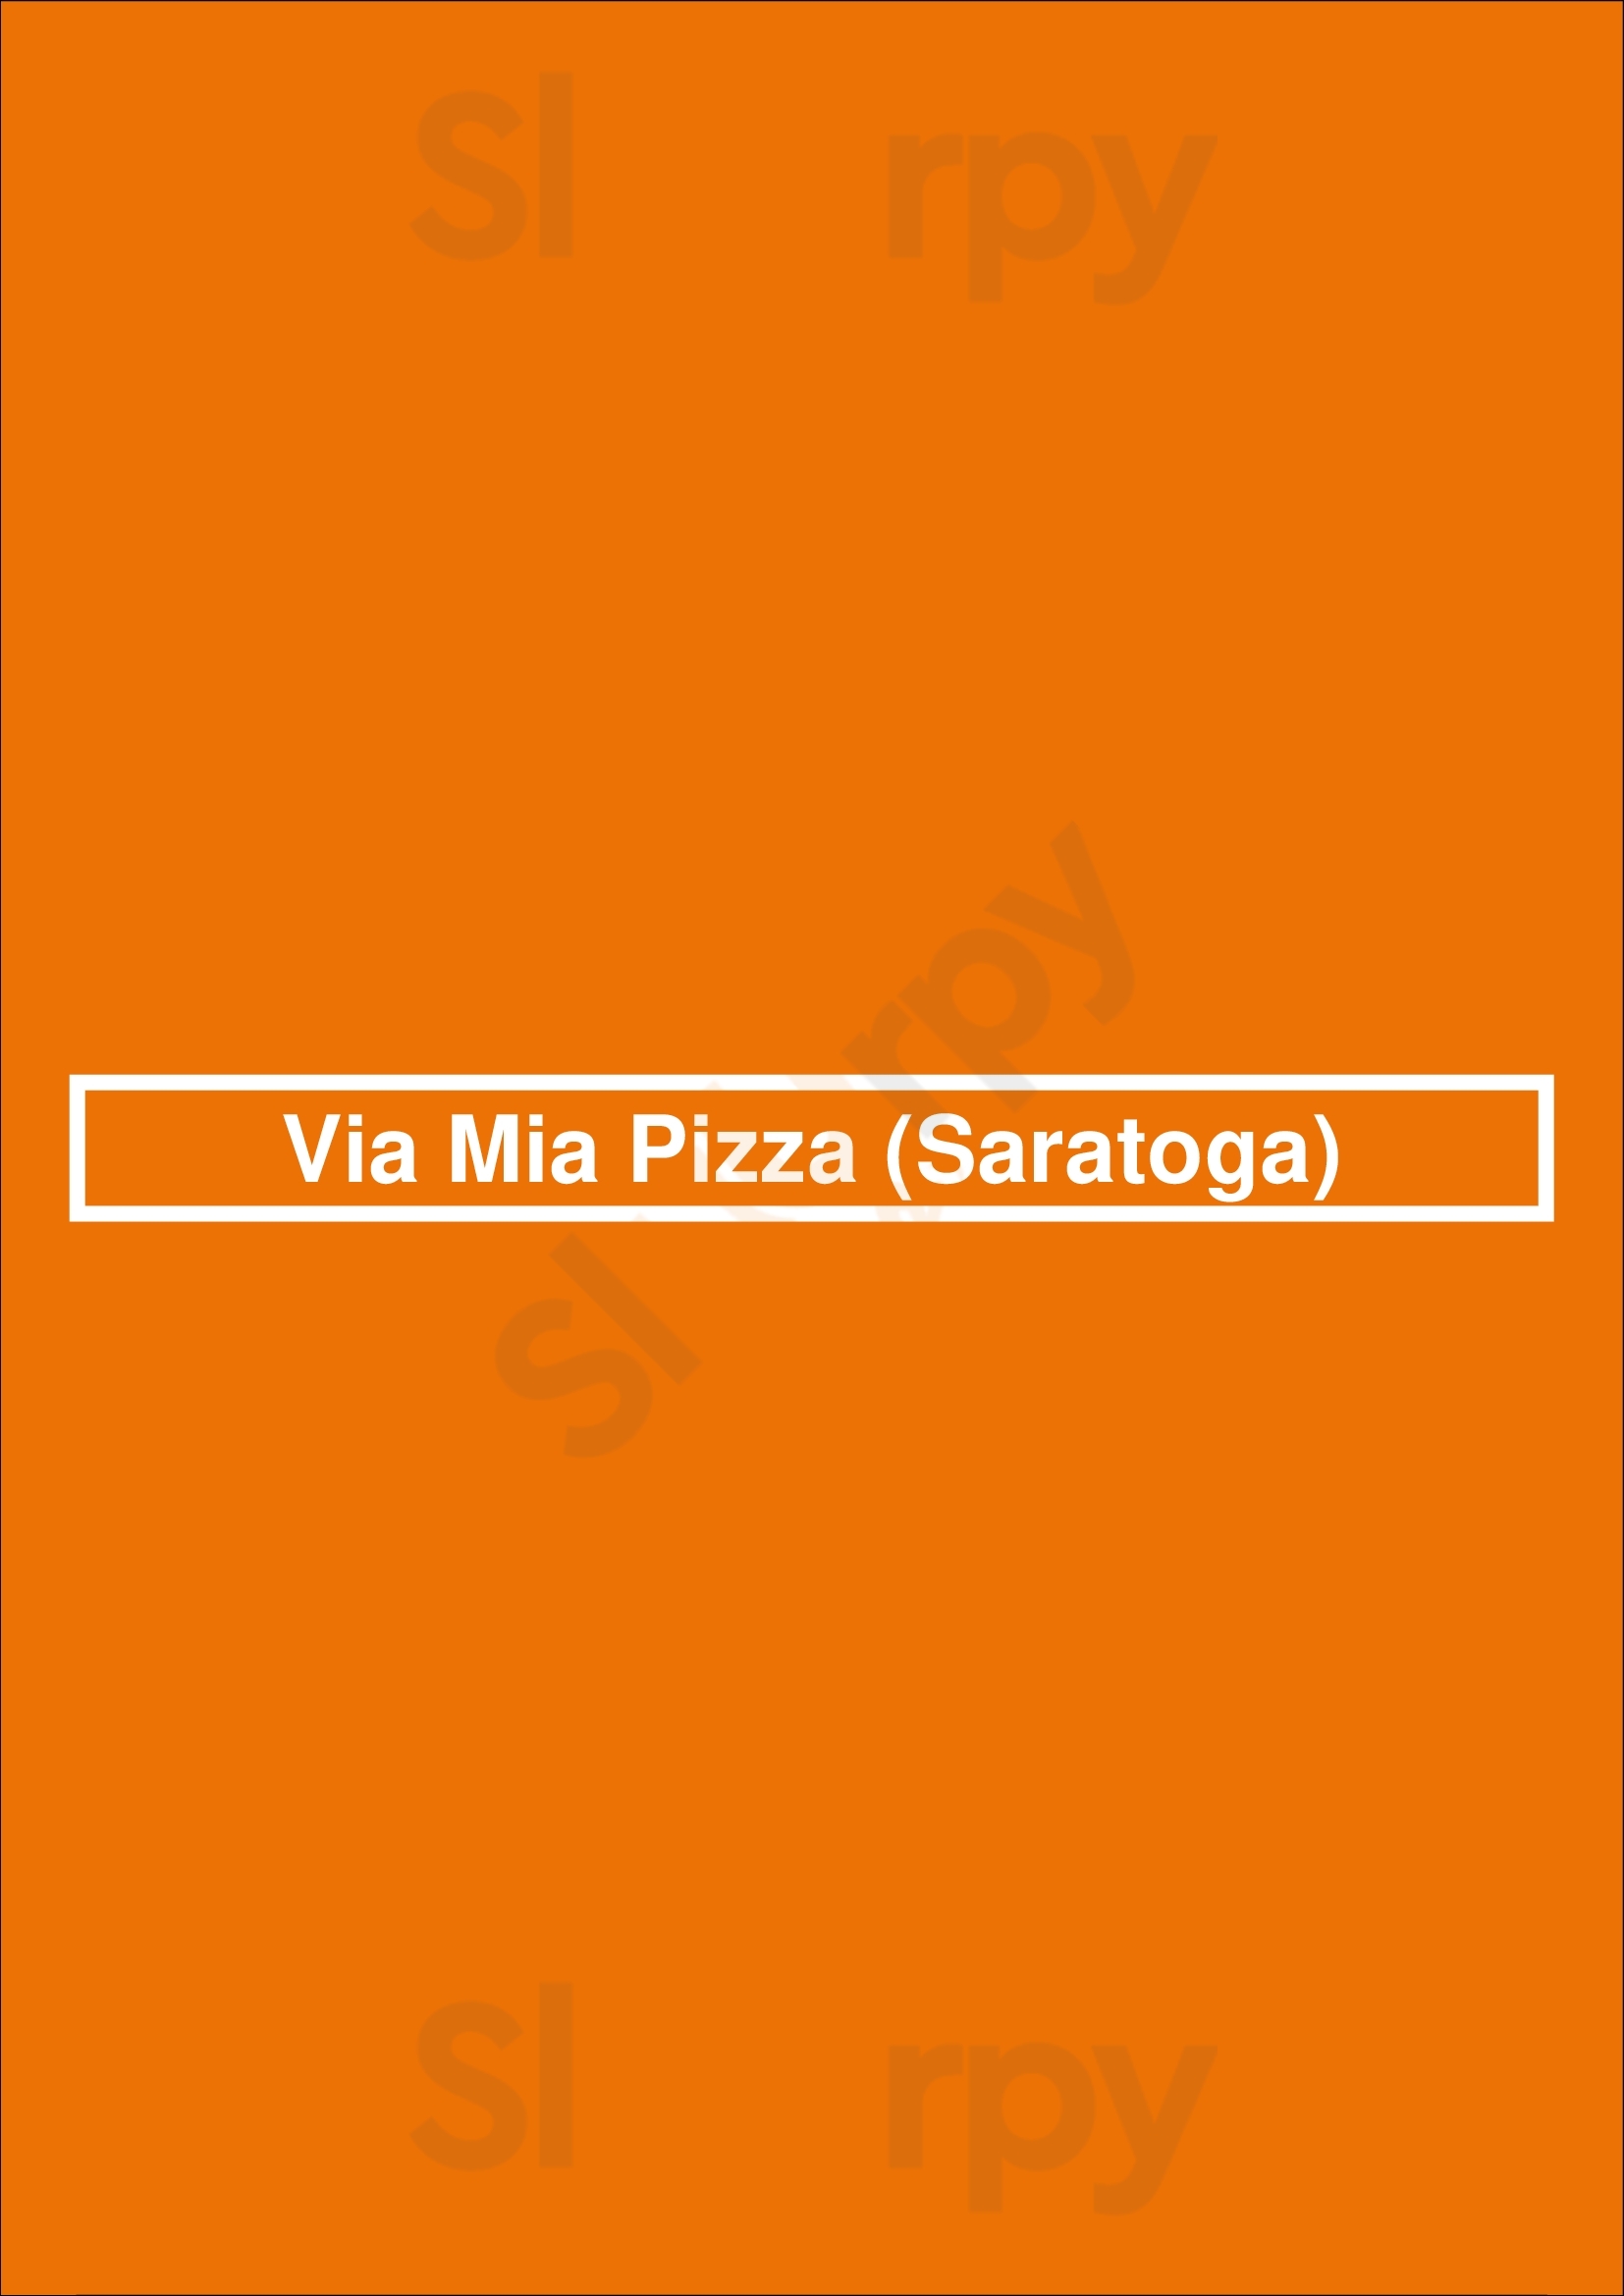 Via Mia Pizza (saratoga) San Jose Menu - 1